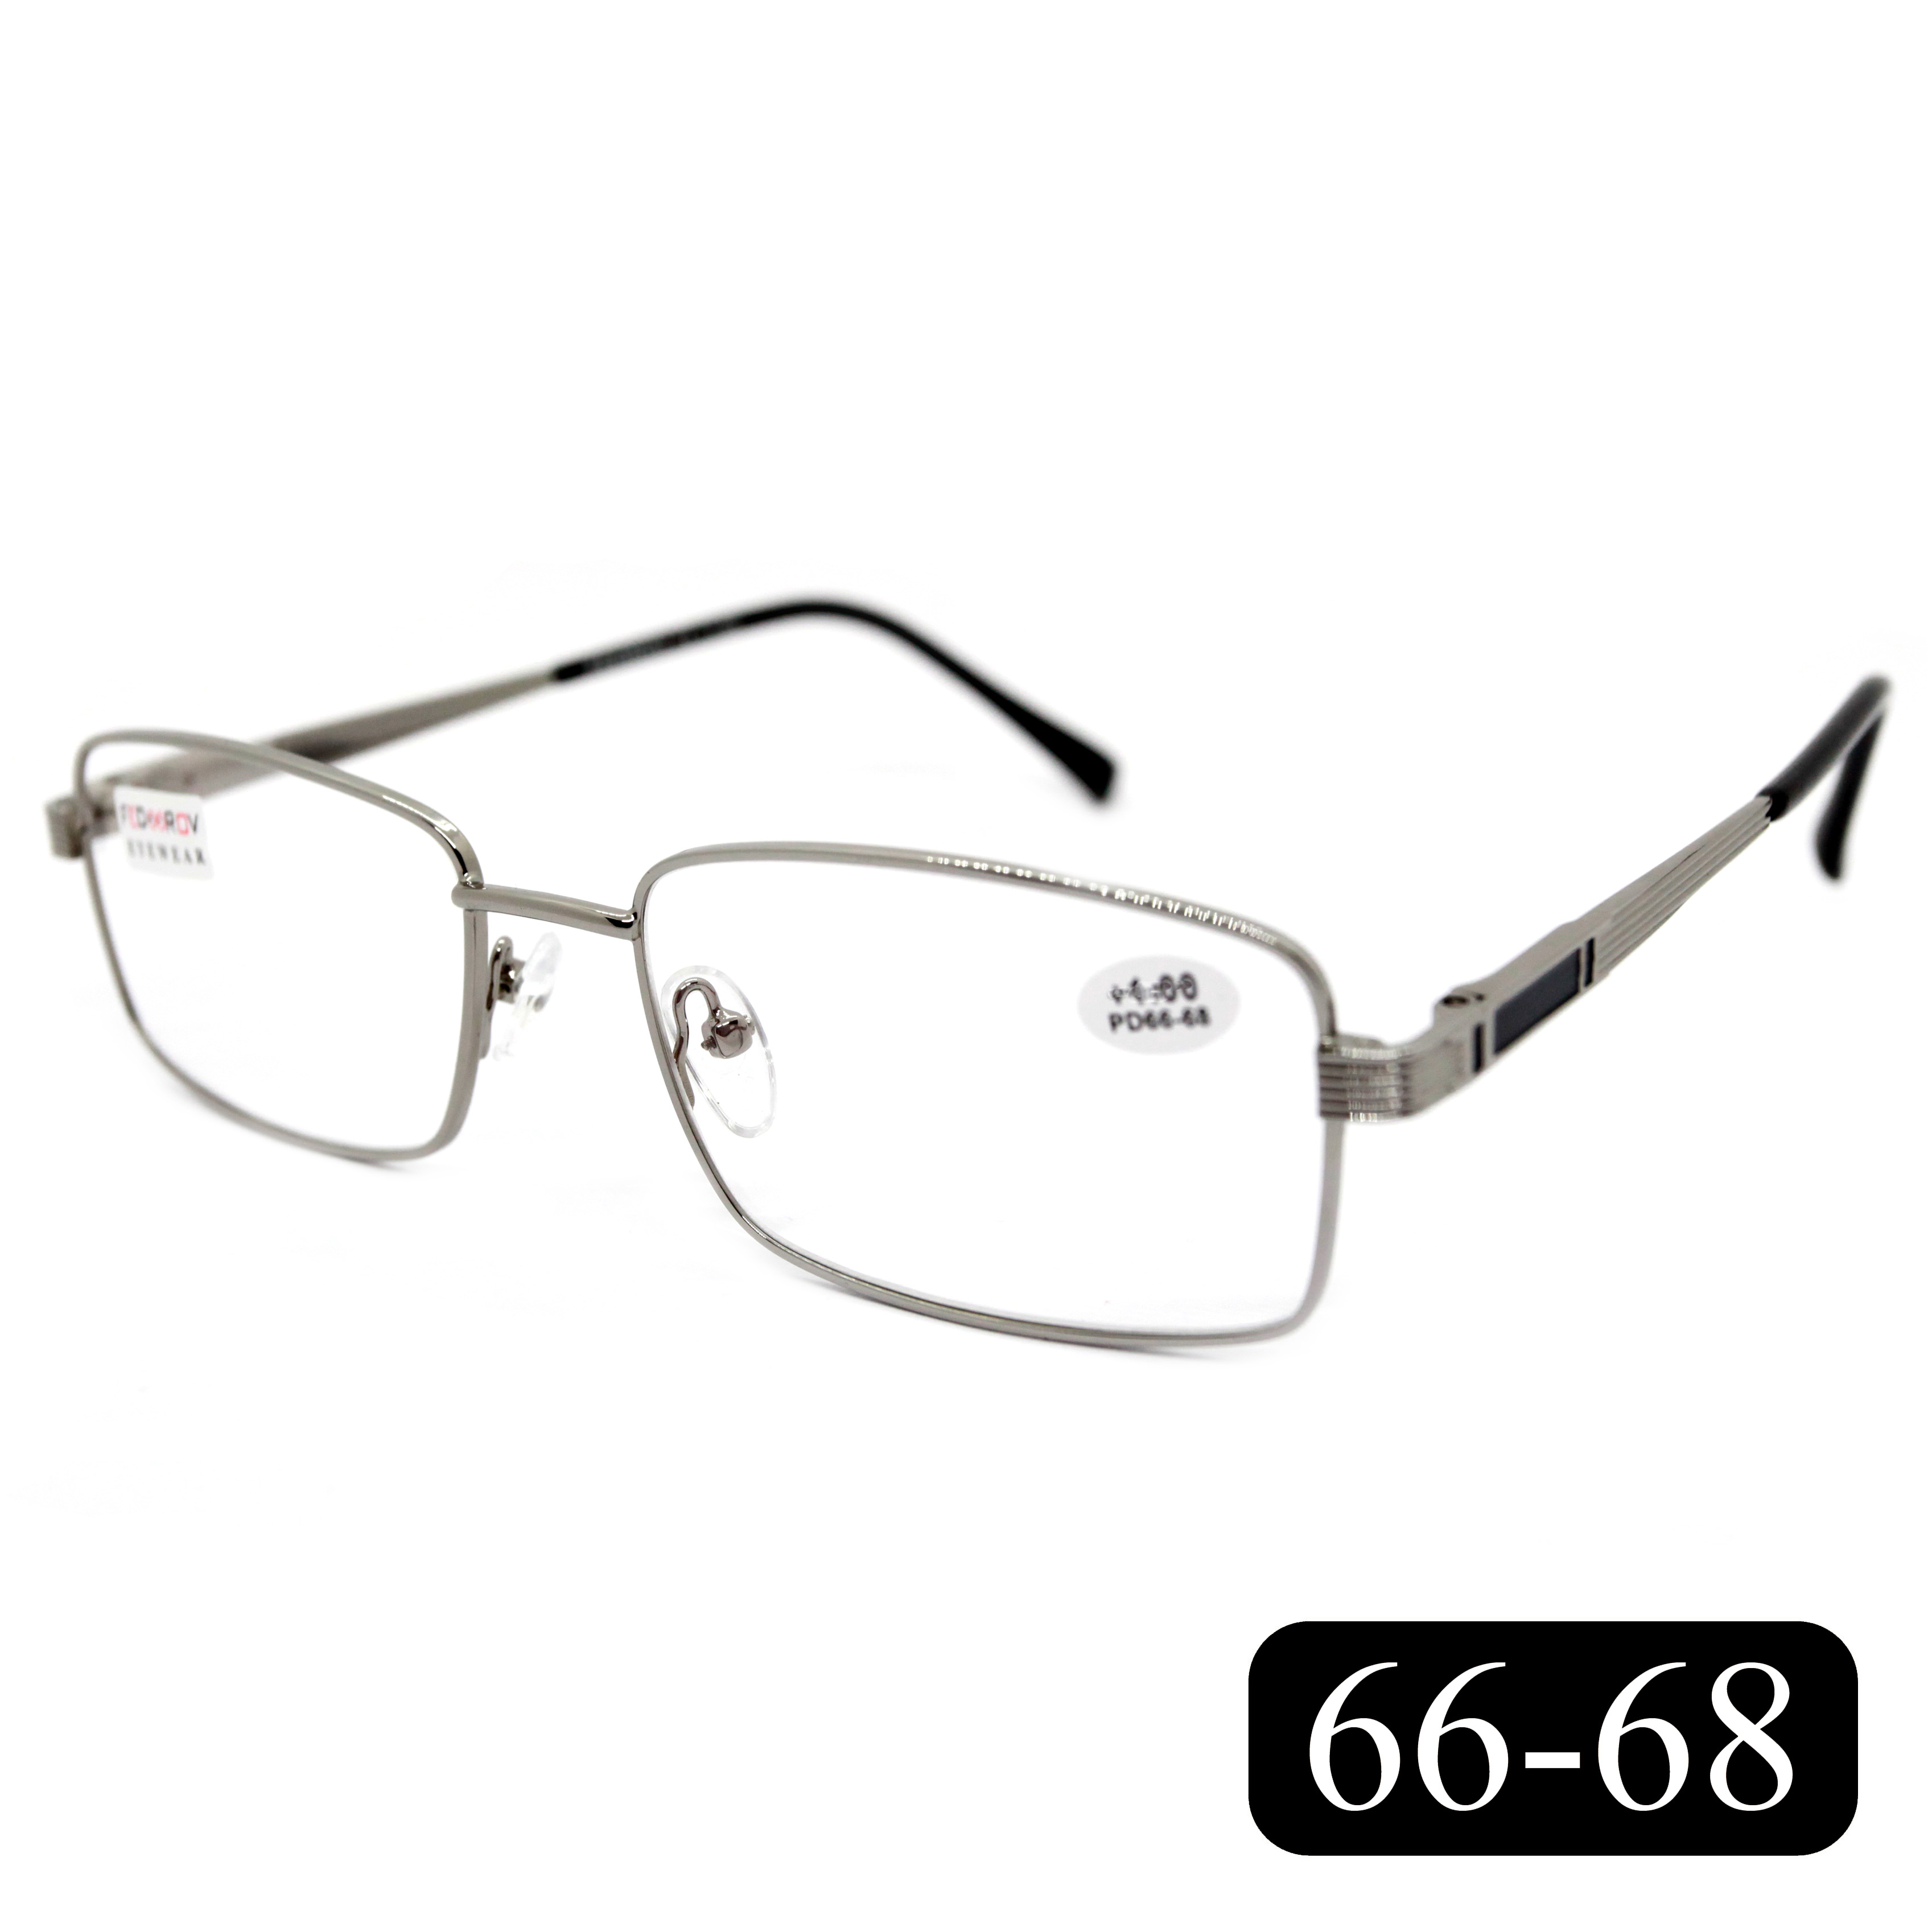 Готовые очки Fedrov 556 +4,50, без футляра, с антибликом, серебристый, РЦ 66-68